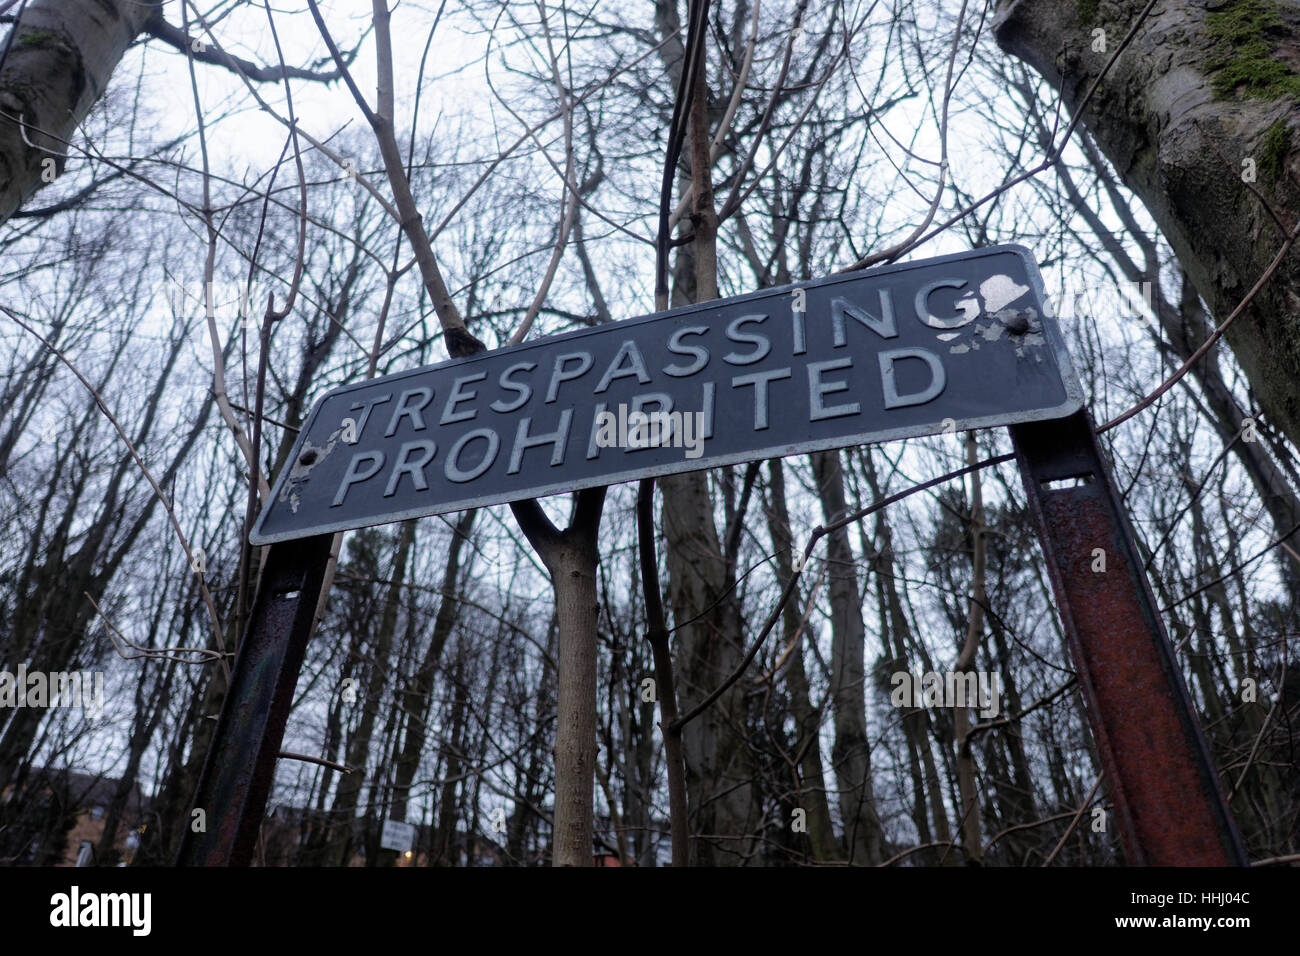 L'intrusion interdite sign in forest Banque D'Images